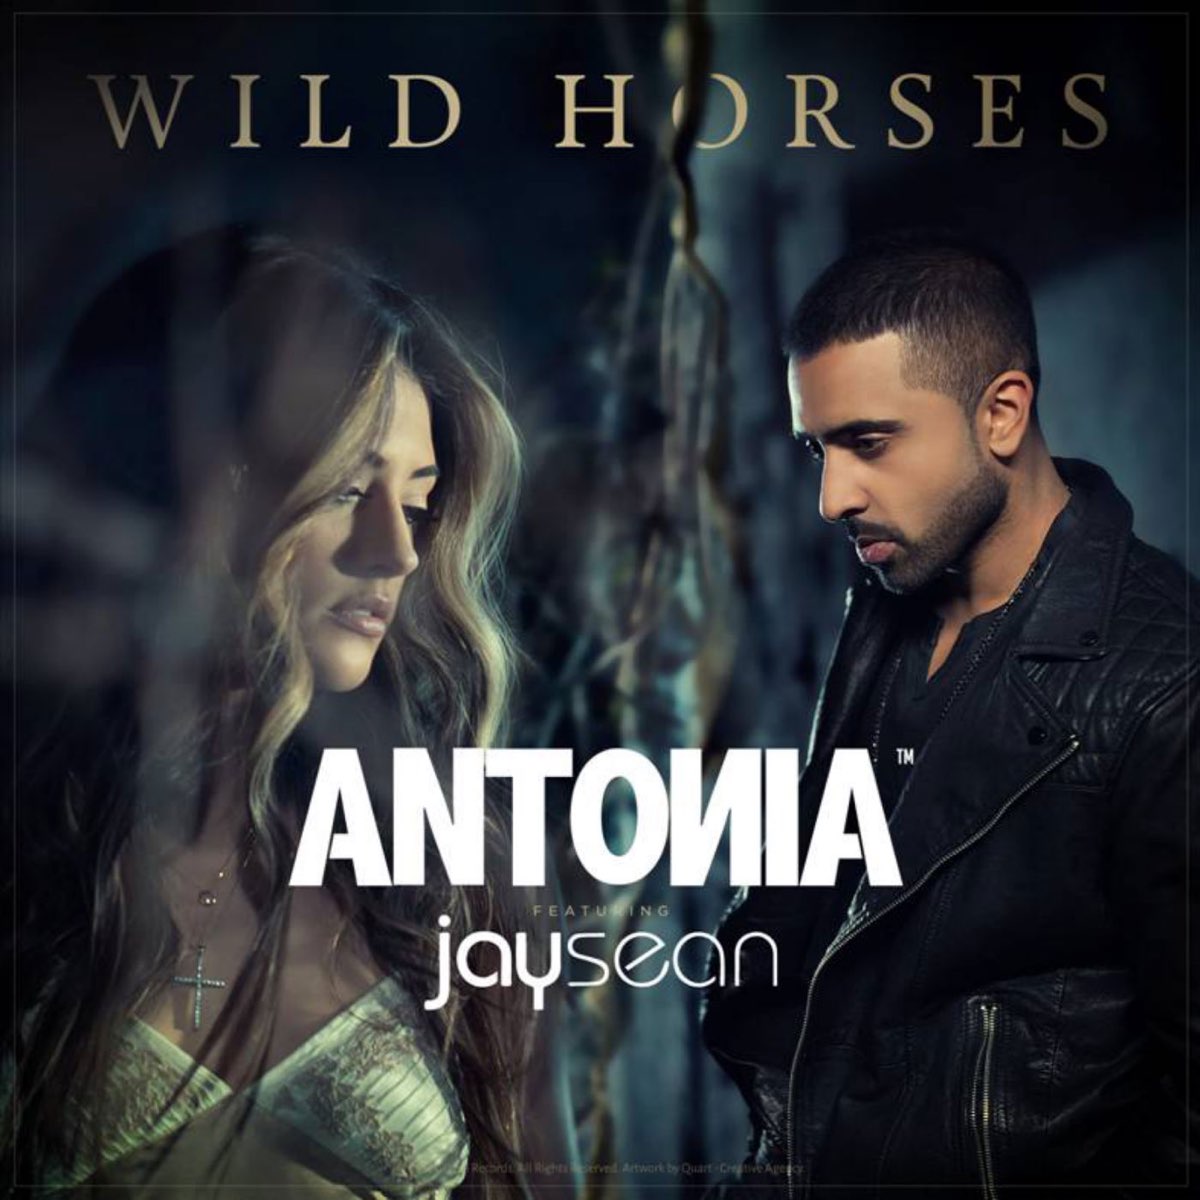 Antonia ft. featuring Jay Sean Wild Horses cover artwork